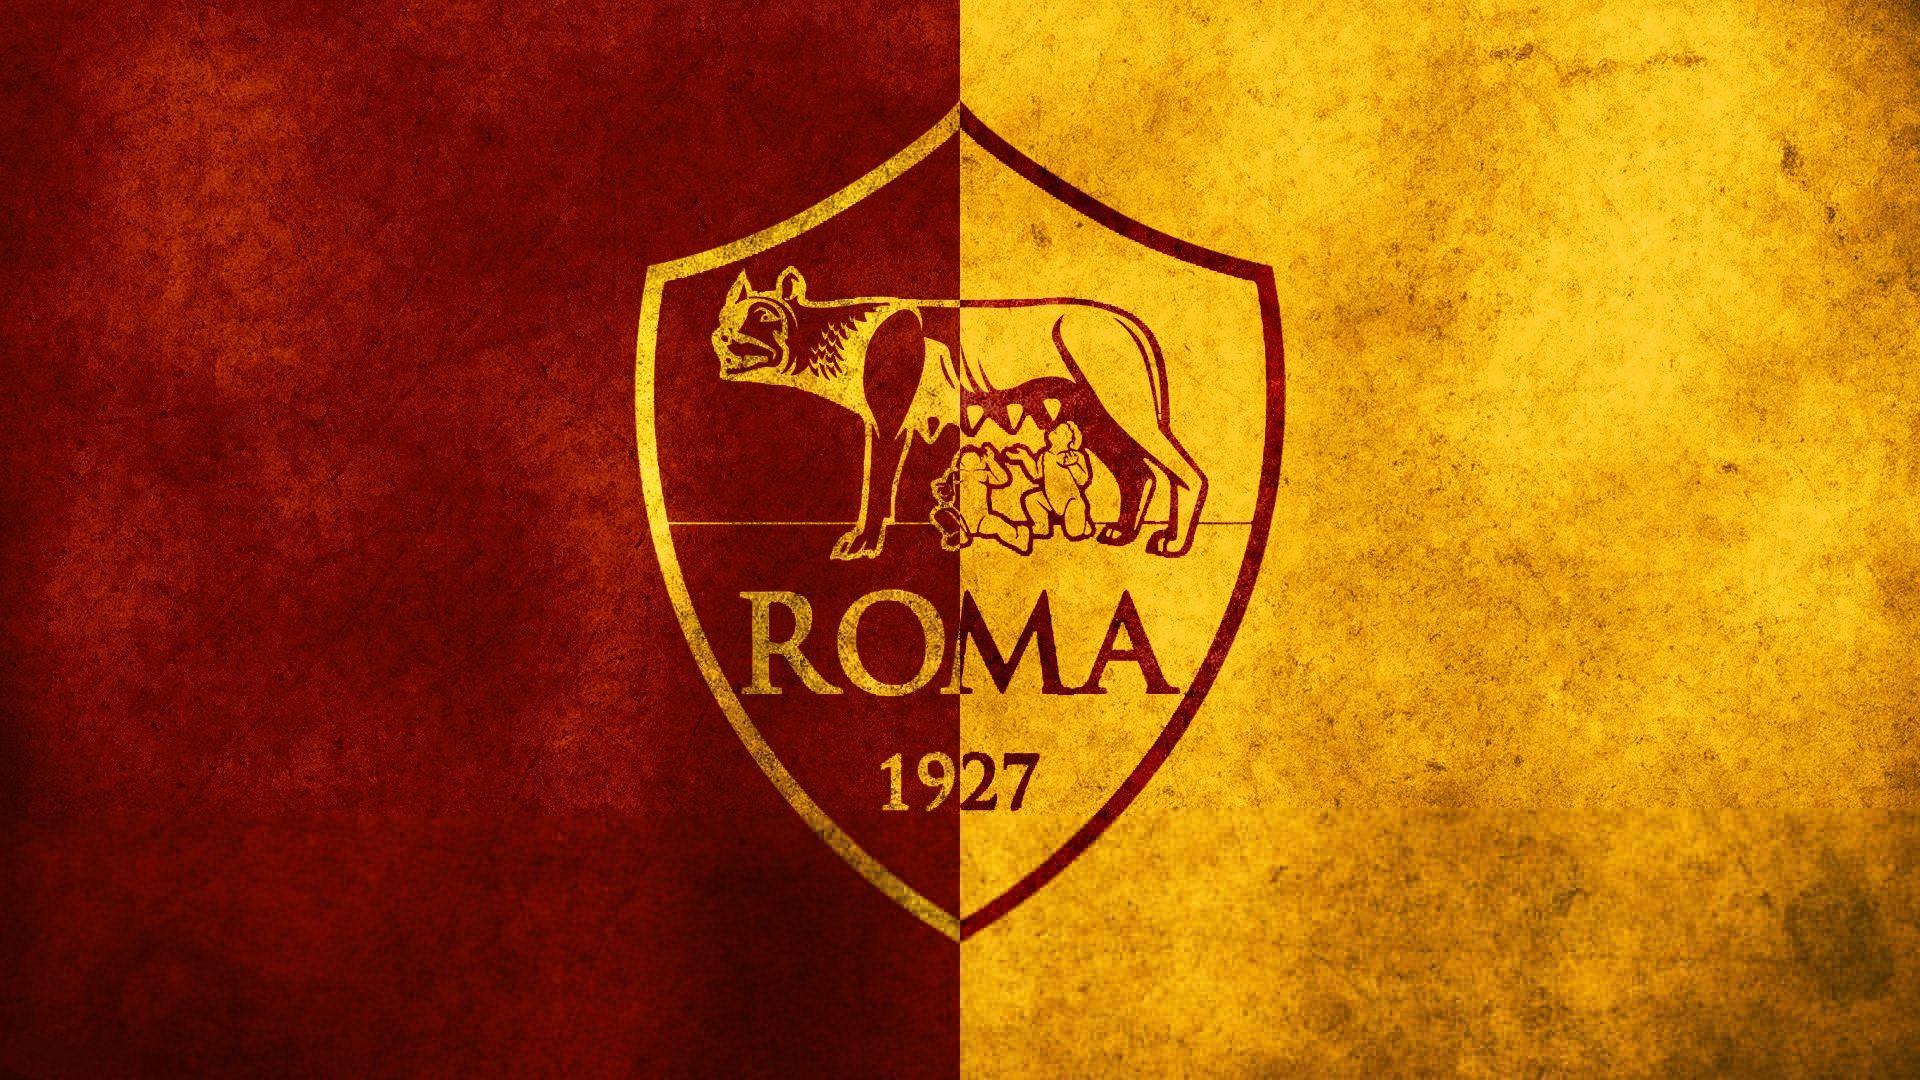 free as roma logo wallpaper background photo windows apple mac